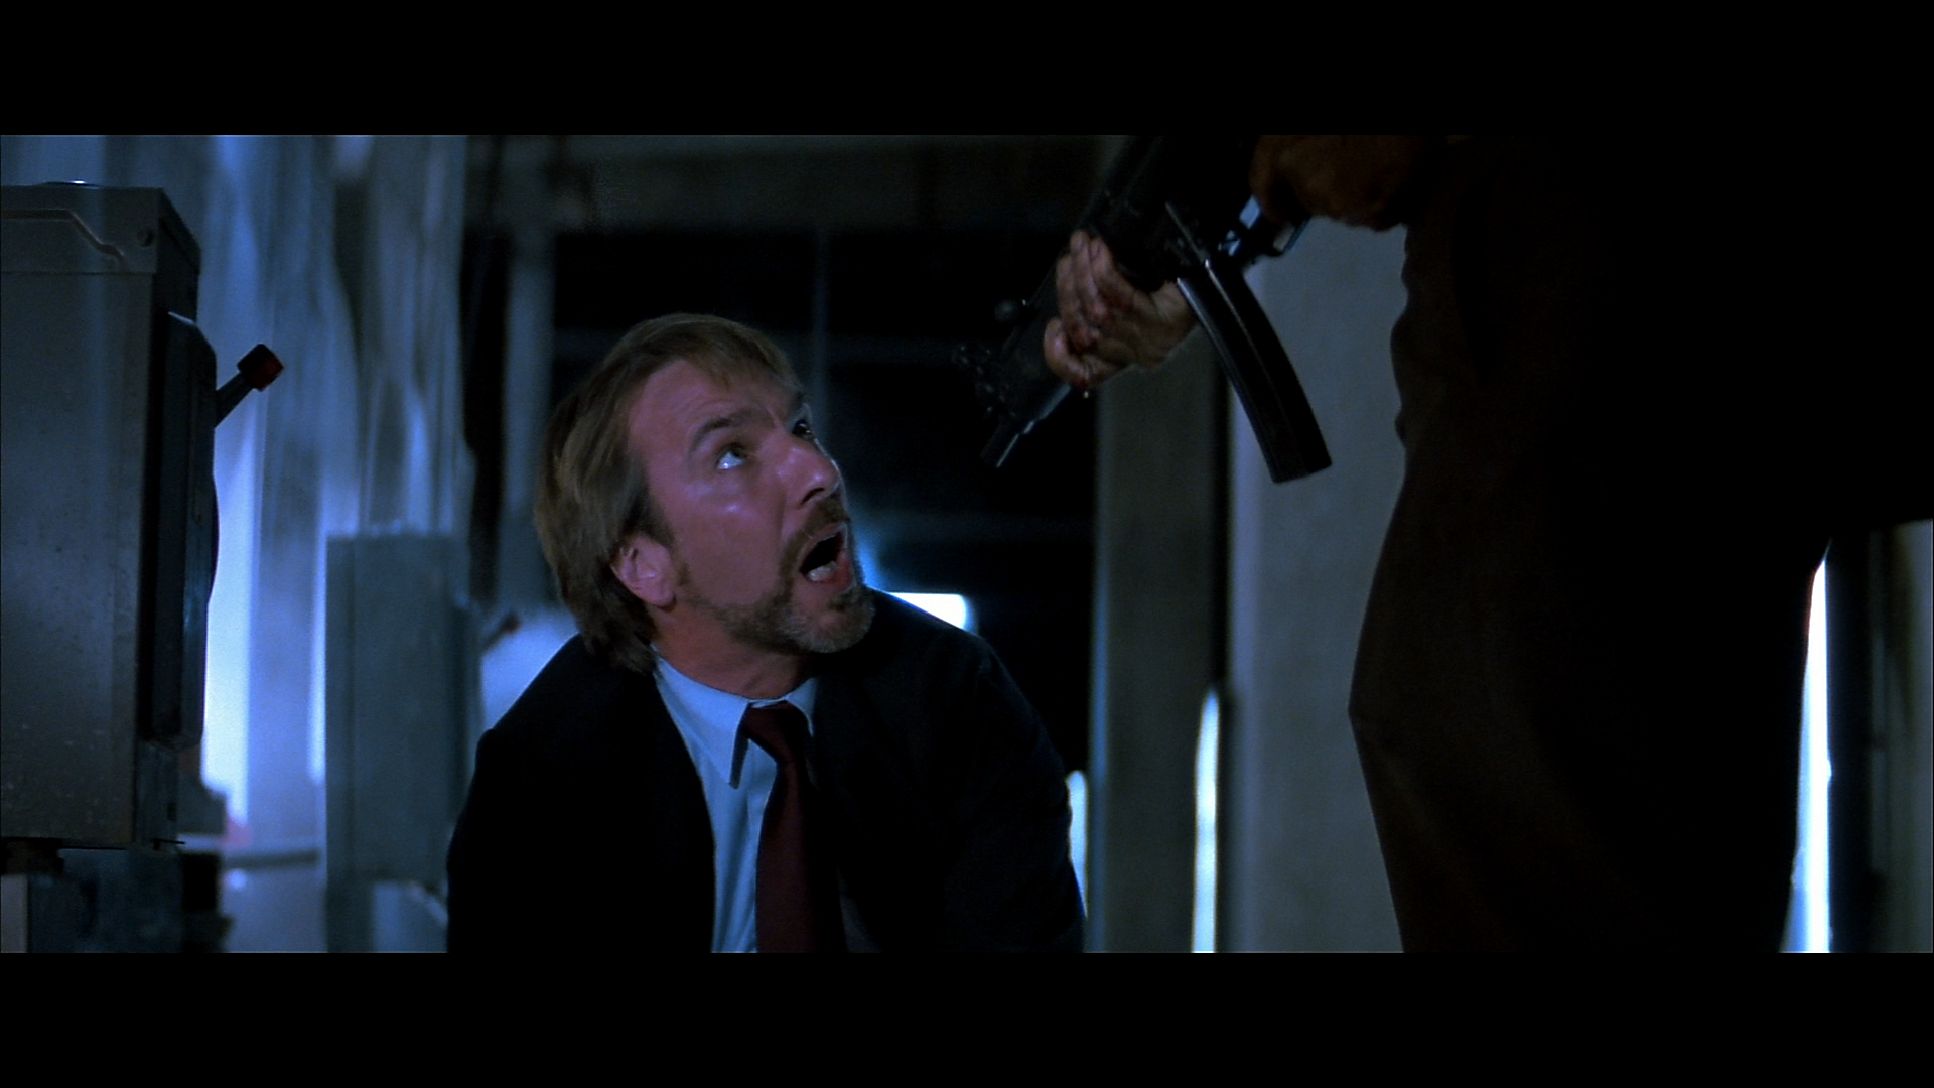 As Hans Gruber in Die Hard, Alan Rickman Redefined Action Movies